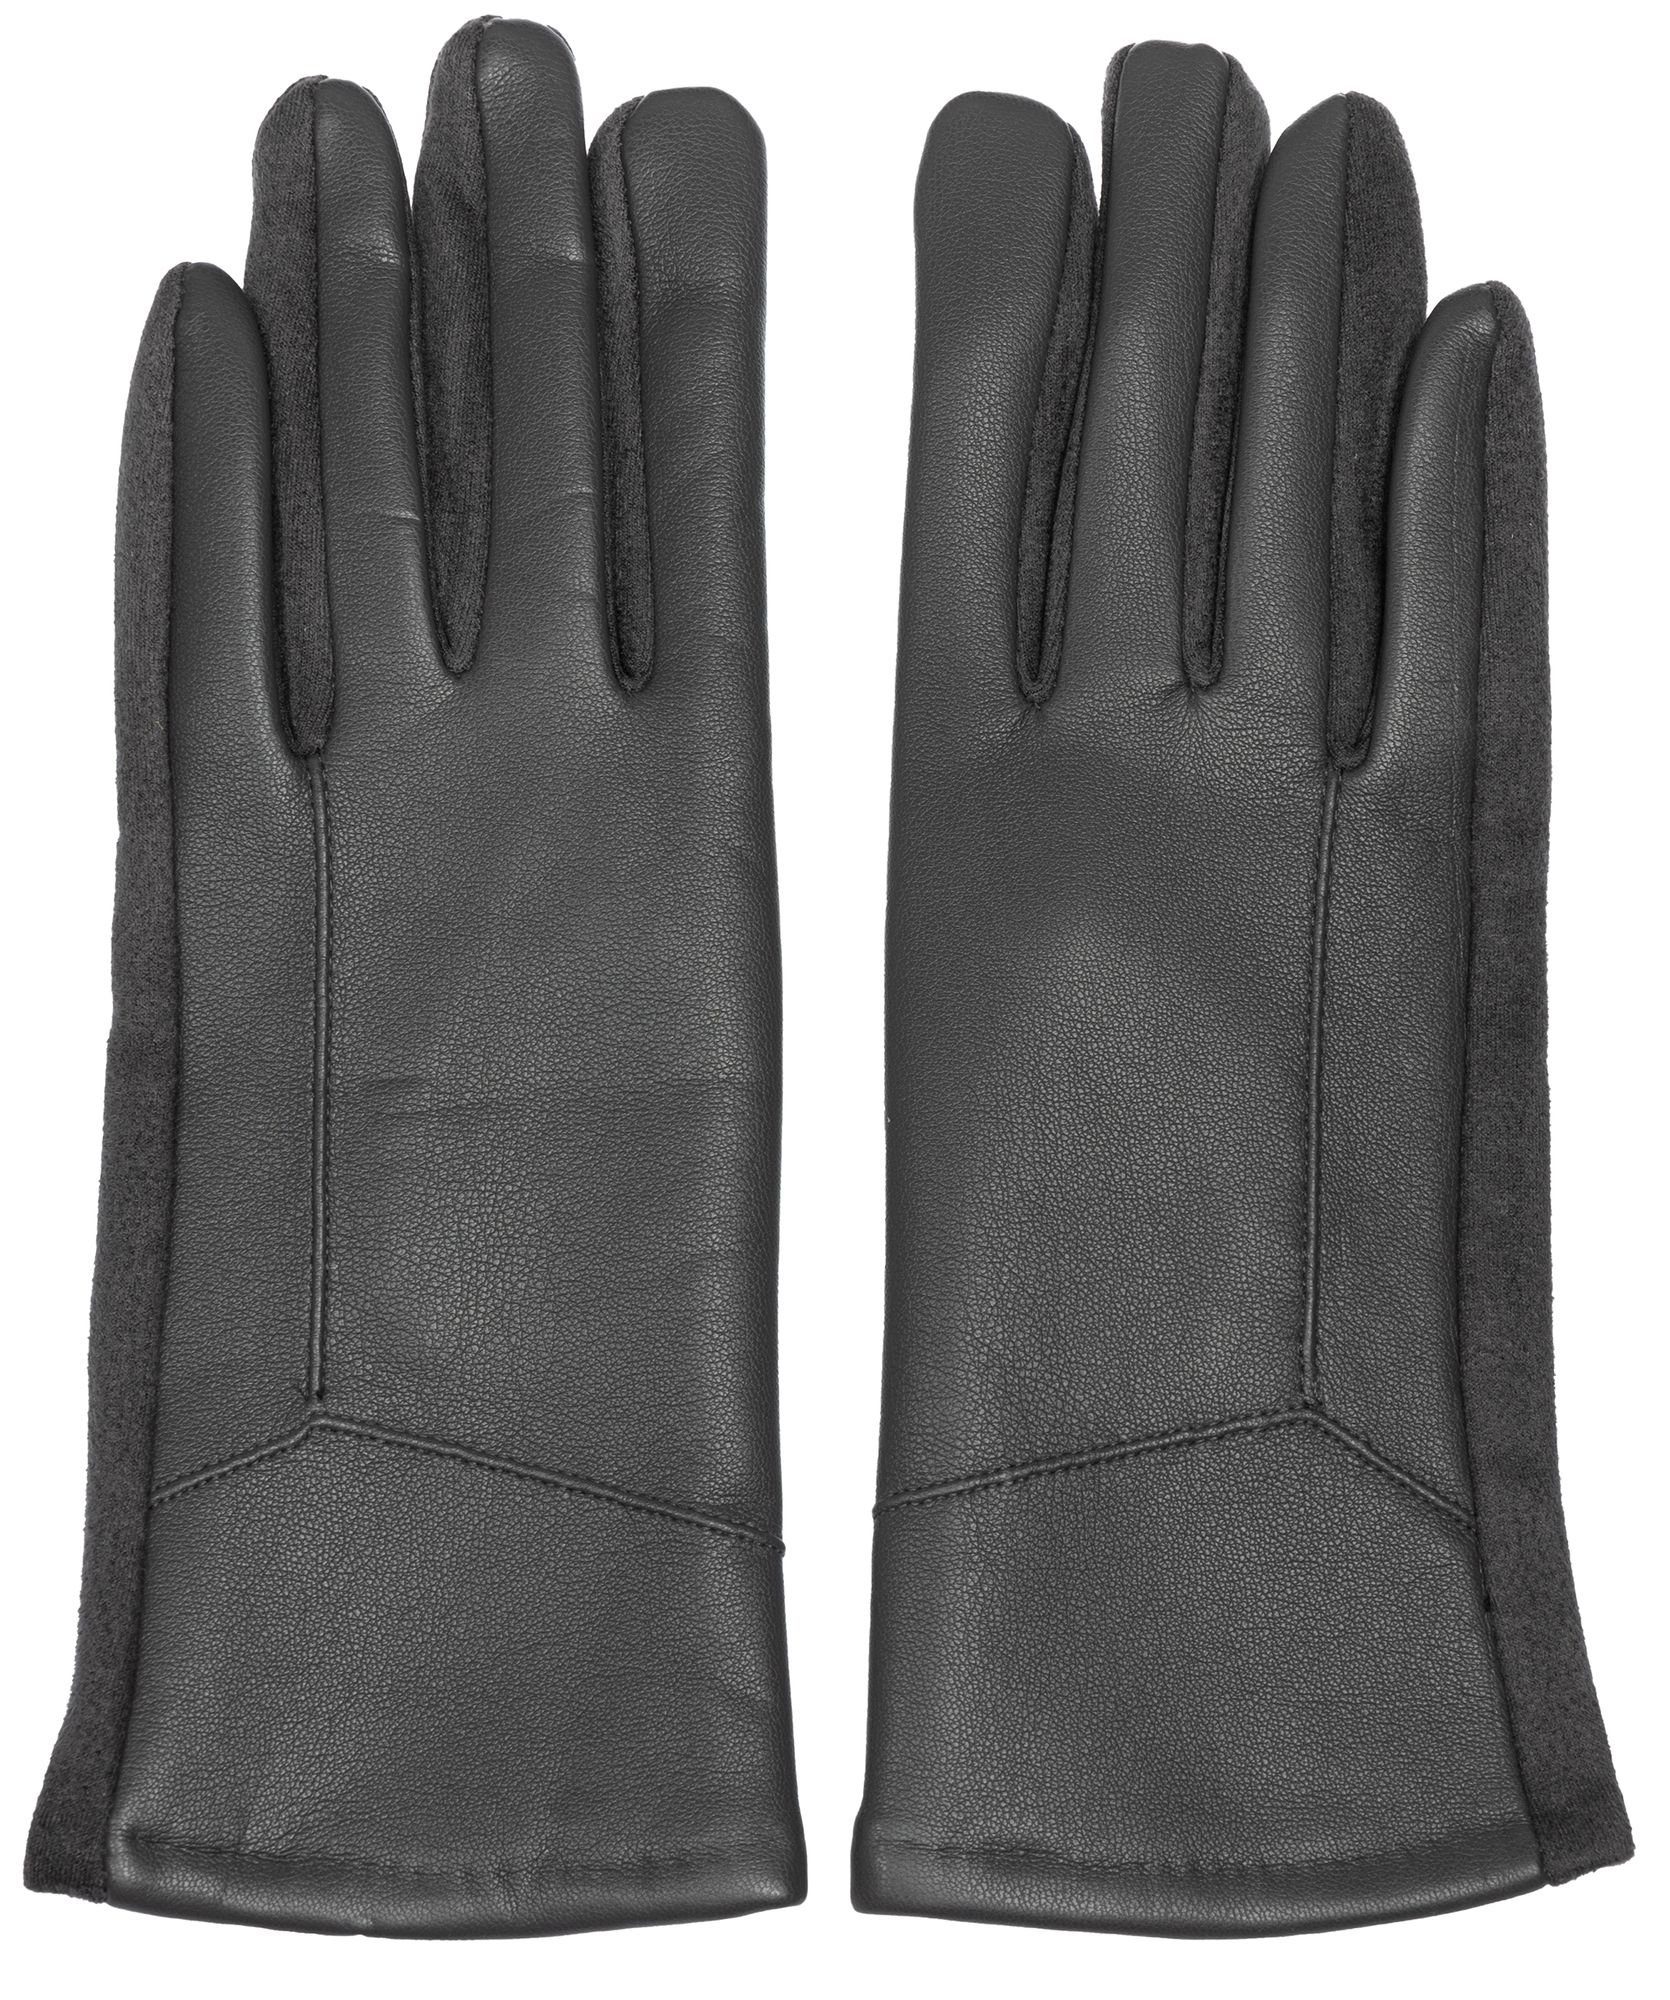 Caspar Strickhandschuhe GLV015 elegante dunkelgrau uni Handschuhe Damen klassisch